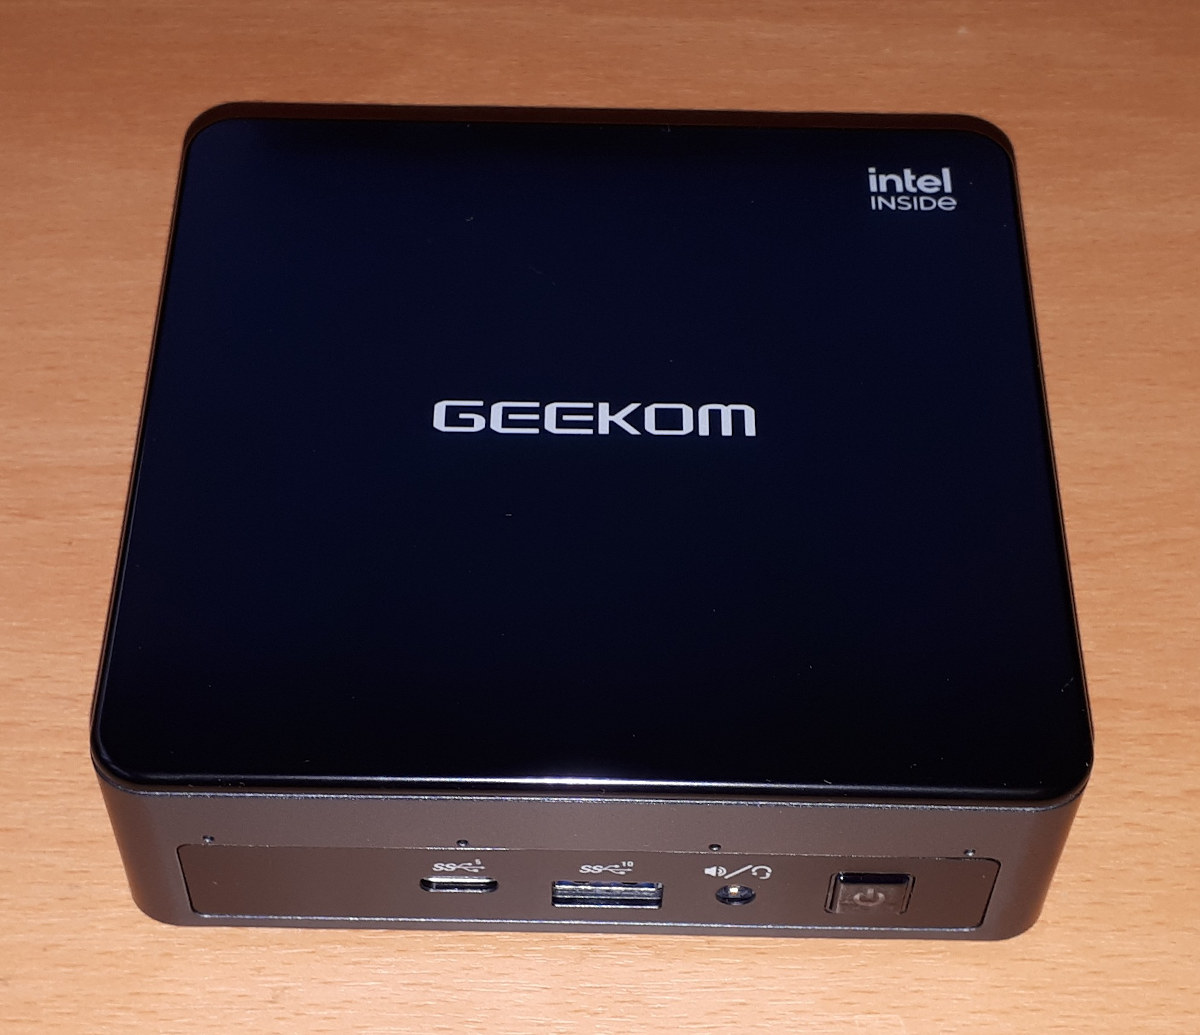 GEEKOM Mini PC  Mini Computer: The Benchmark for Mini PC